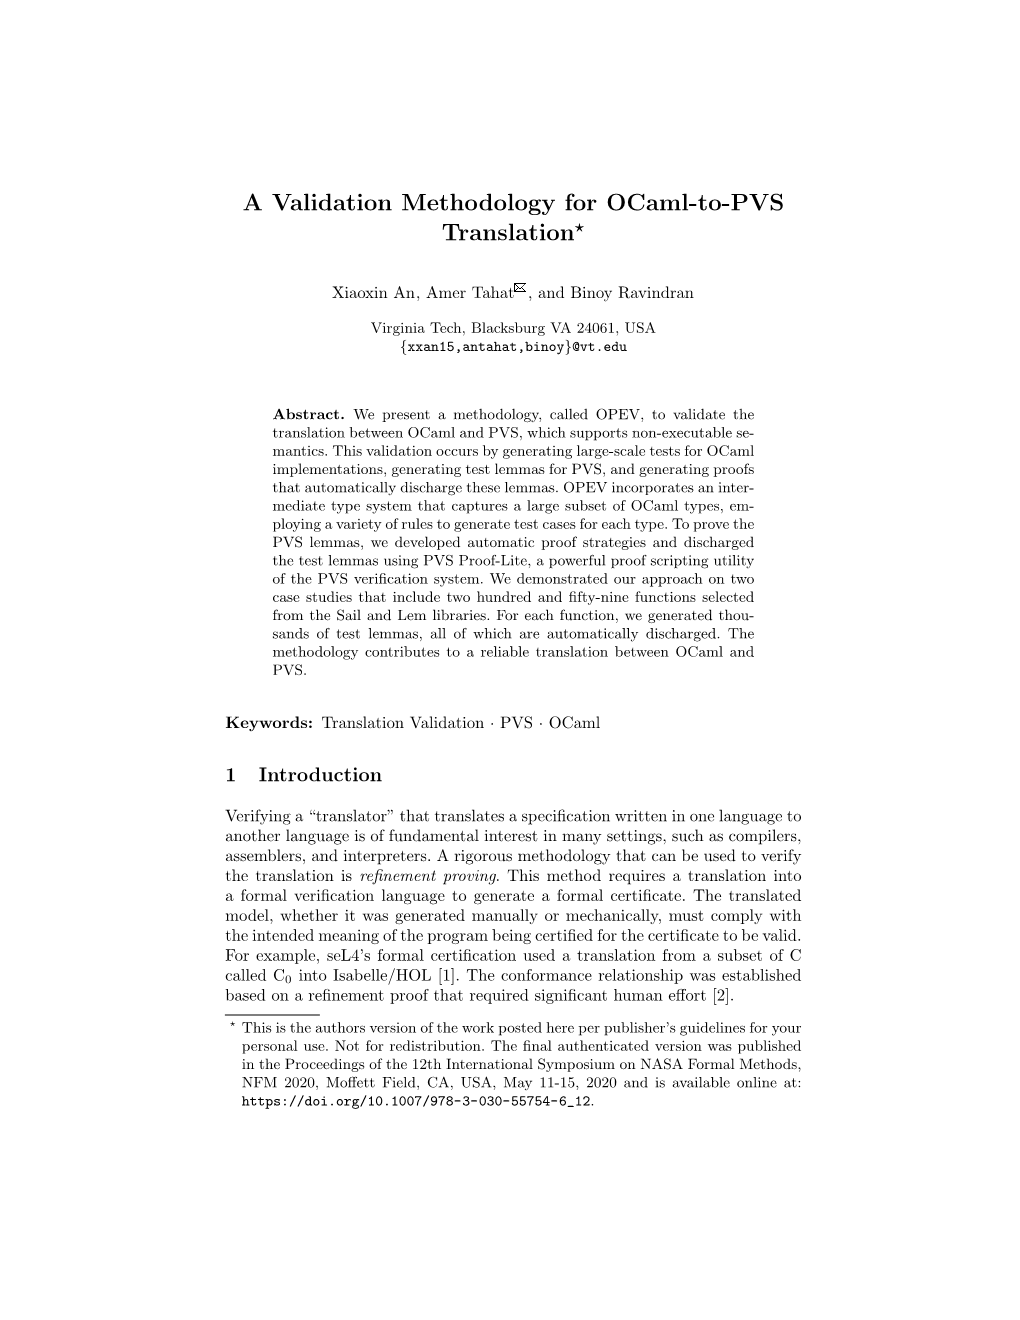 A Validation Methodology for Ocaml-To-PVS Translation⋆